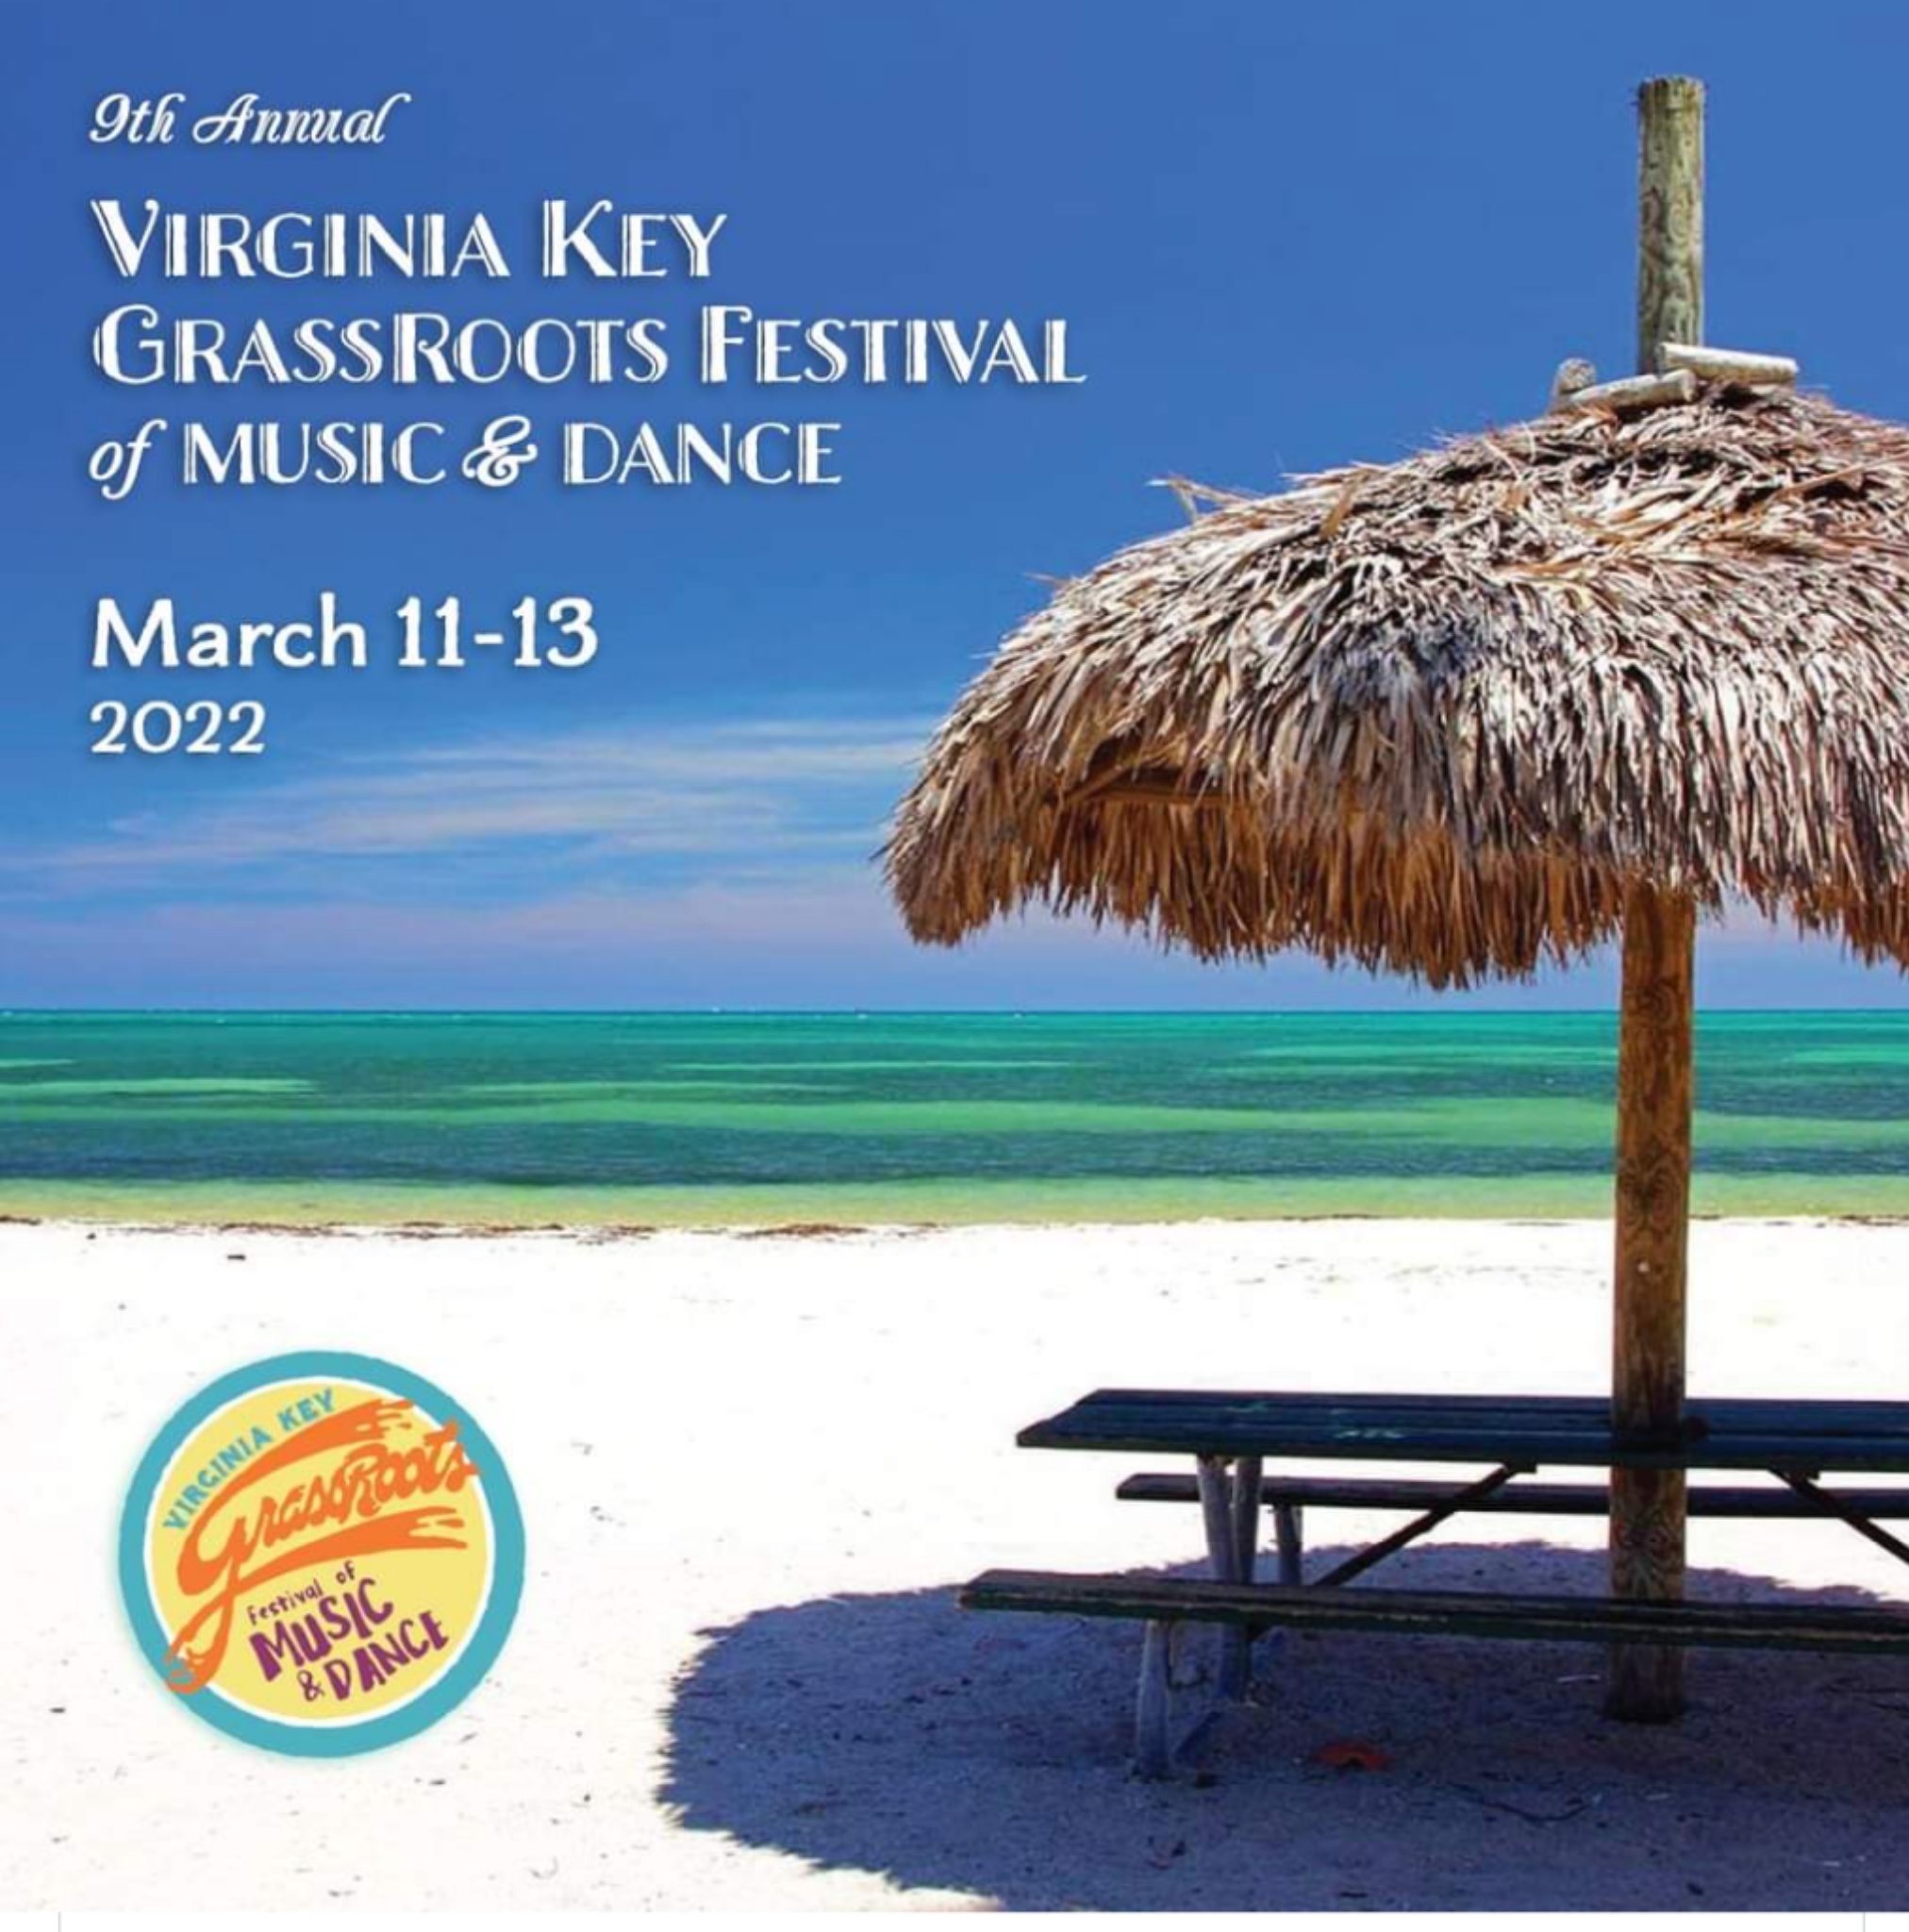 Virginia Key GrassRoots Festival of Music & Dance